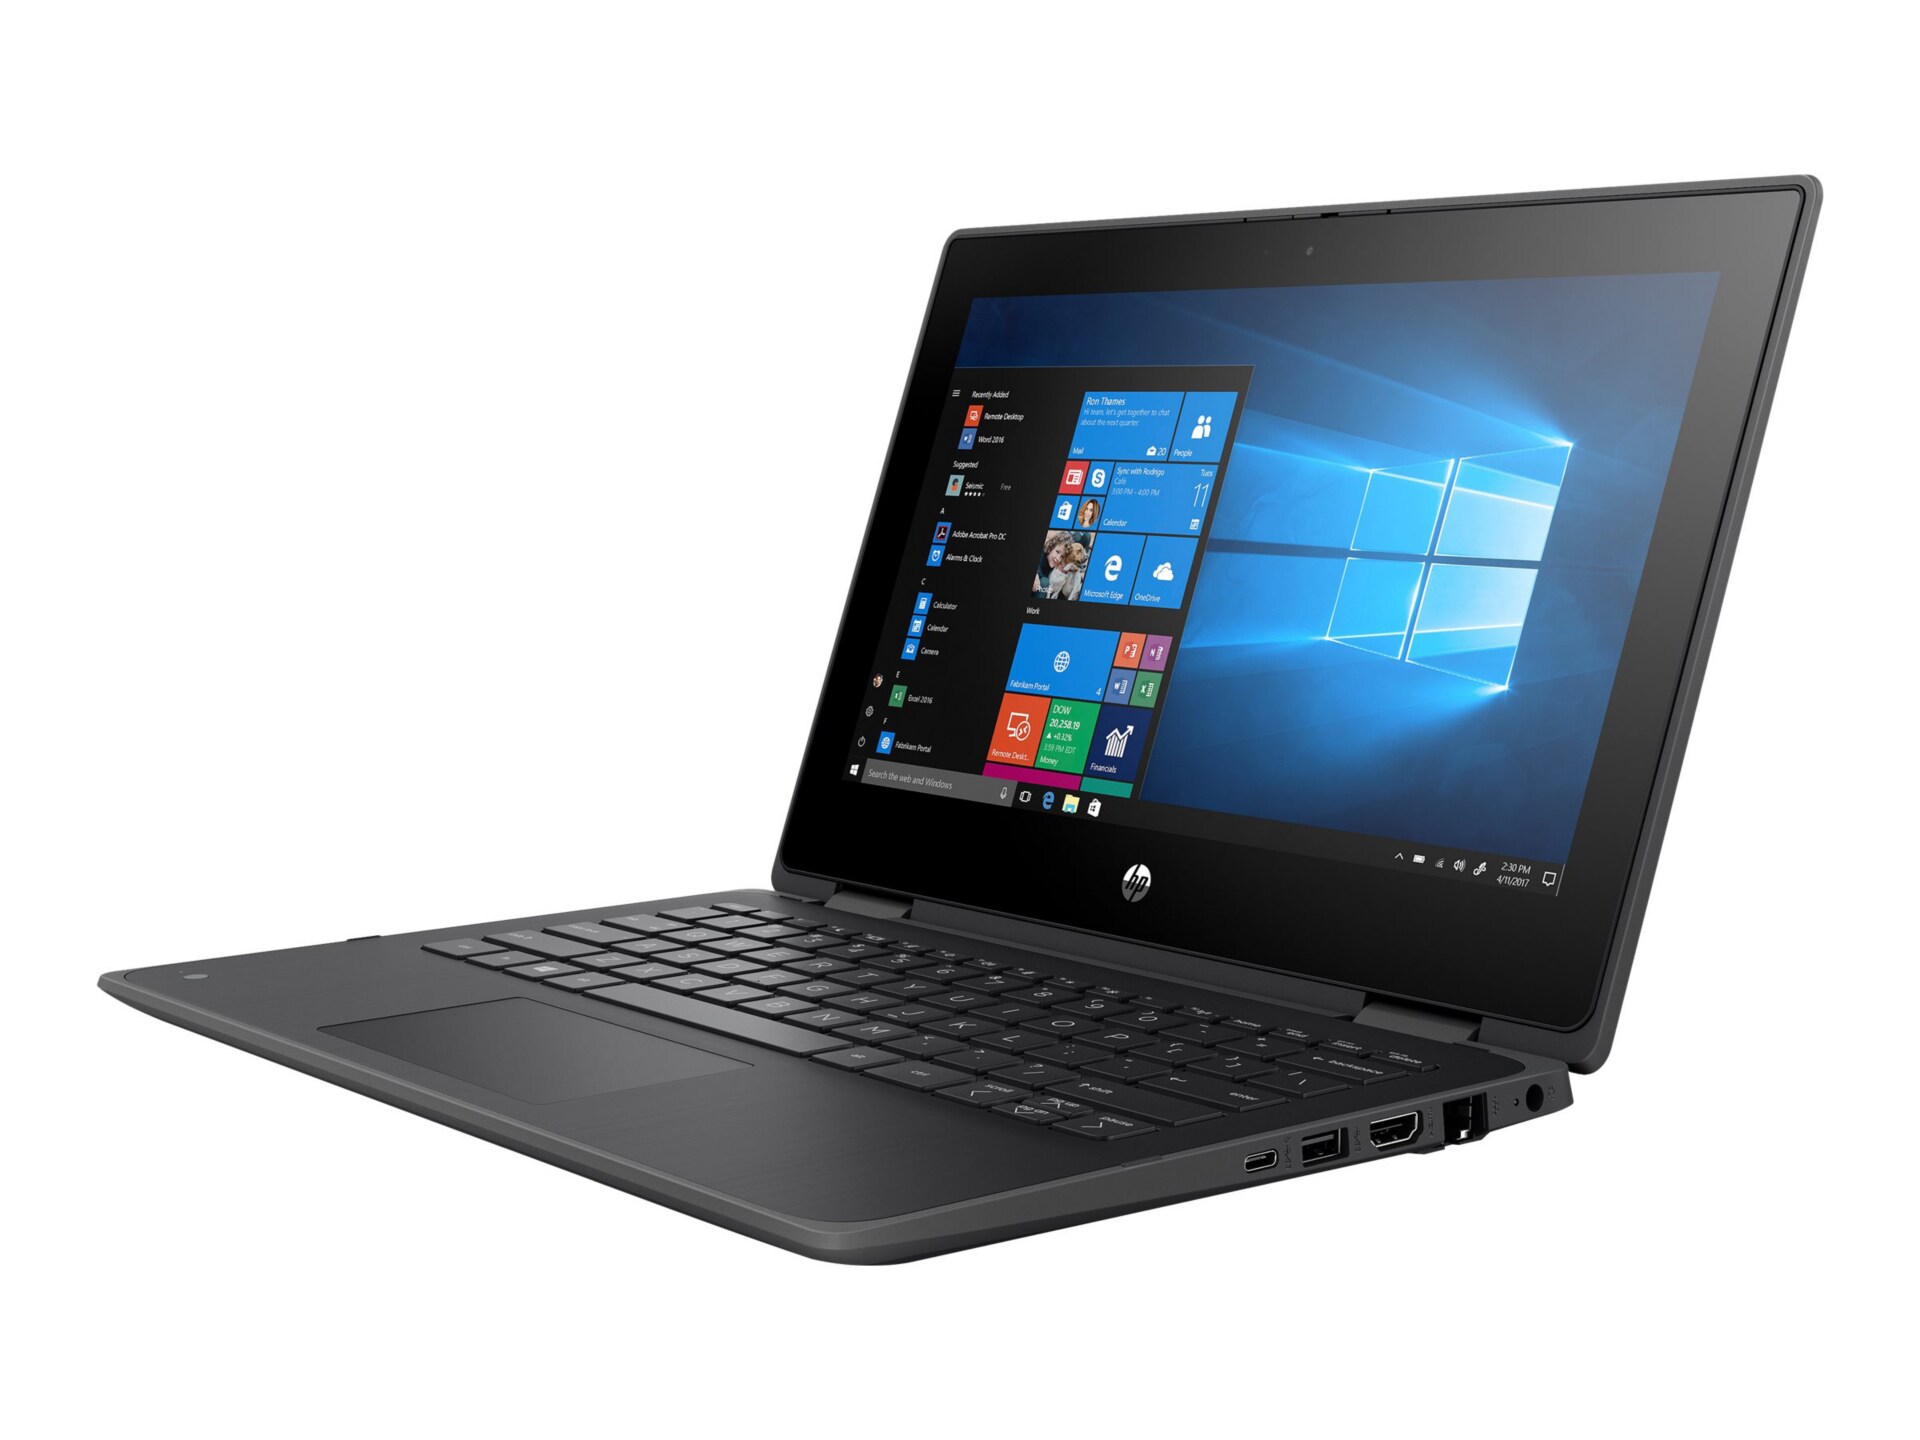 HP ProBook x360 11 G5 Education Edition Notebook - 11.6" - Celeron N4120 - 4 GB RAM - 128 GB SSD - US